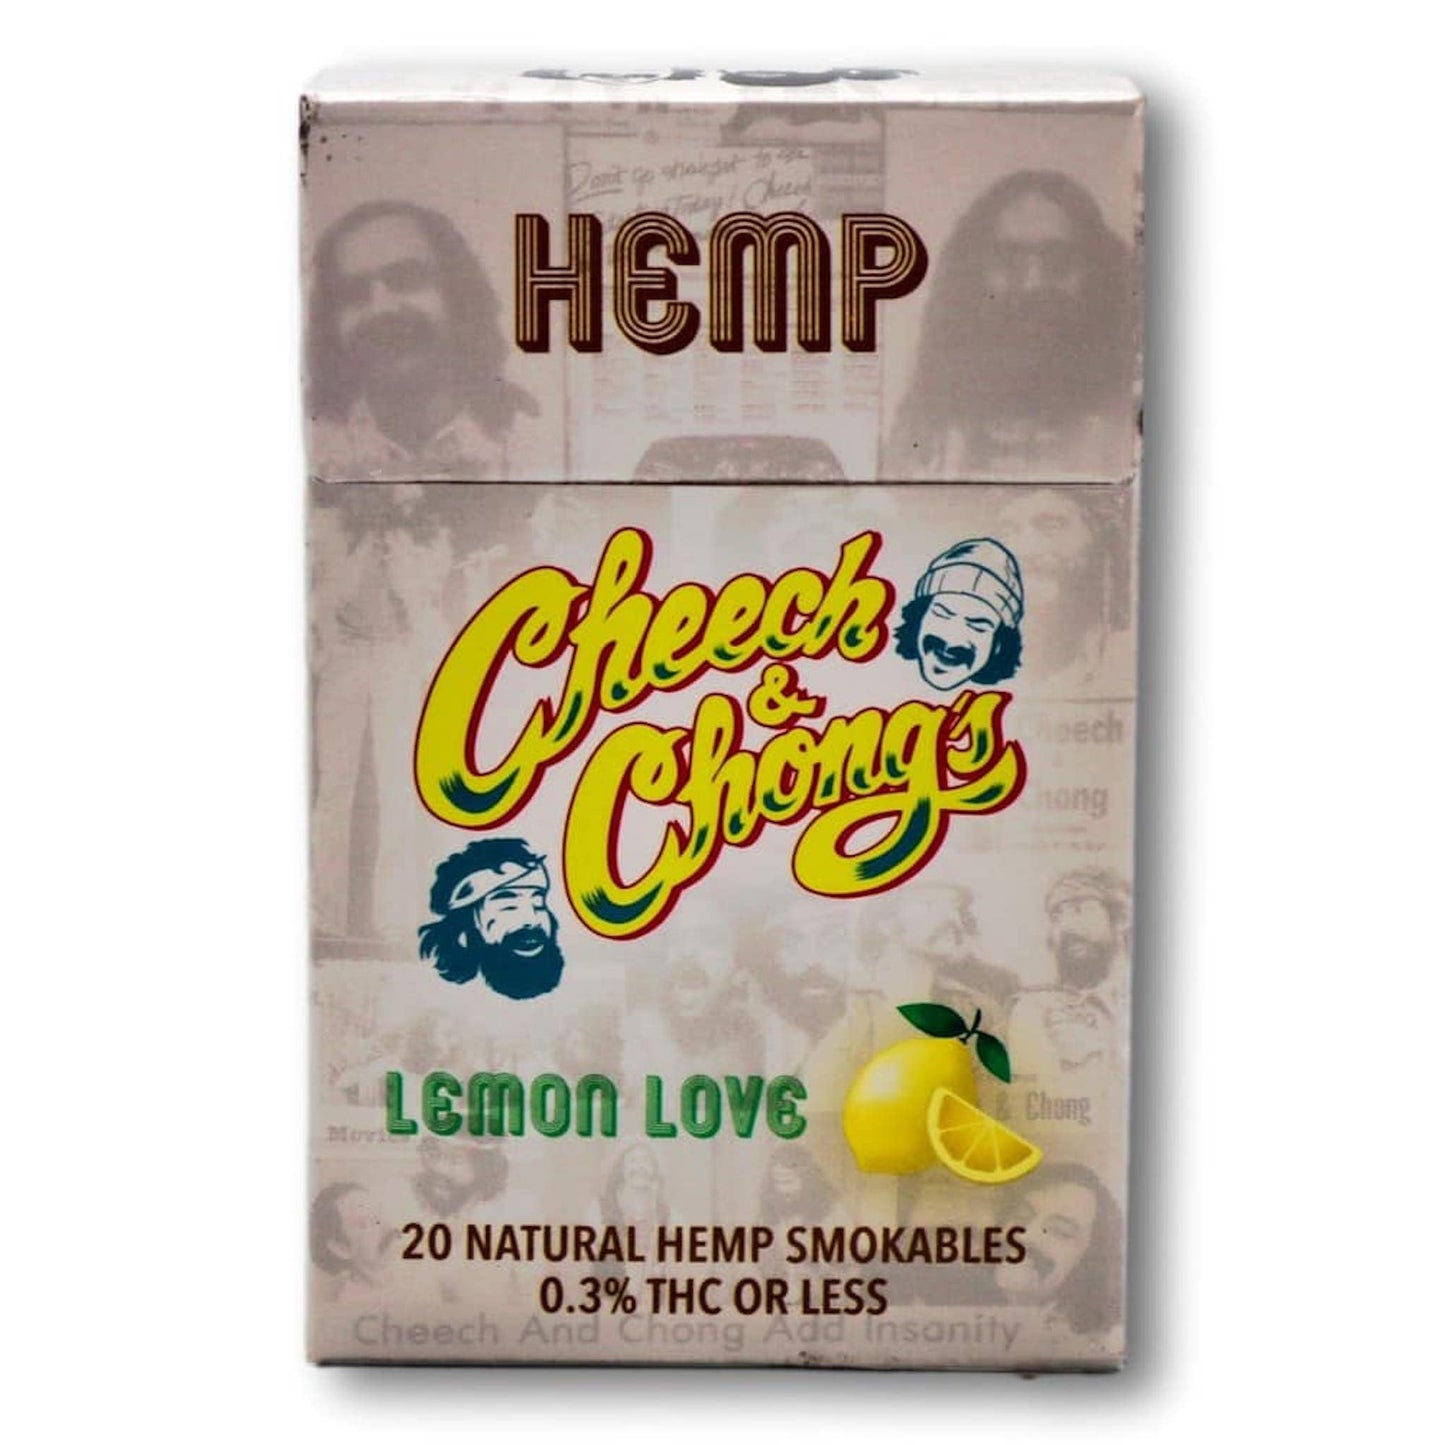 Cheech n Chong CBD Hemp Cigarettes